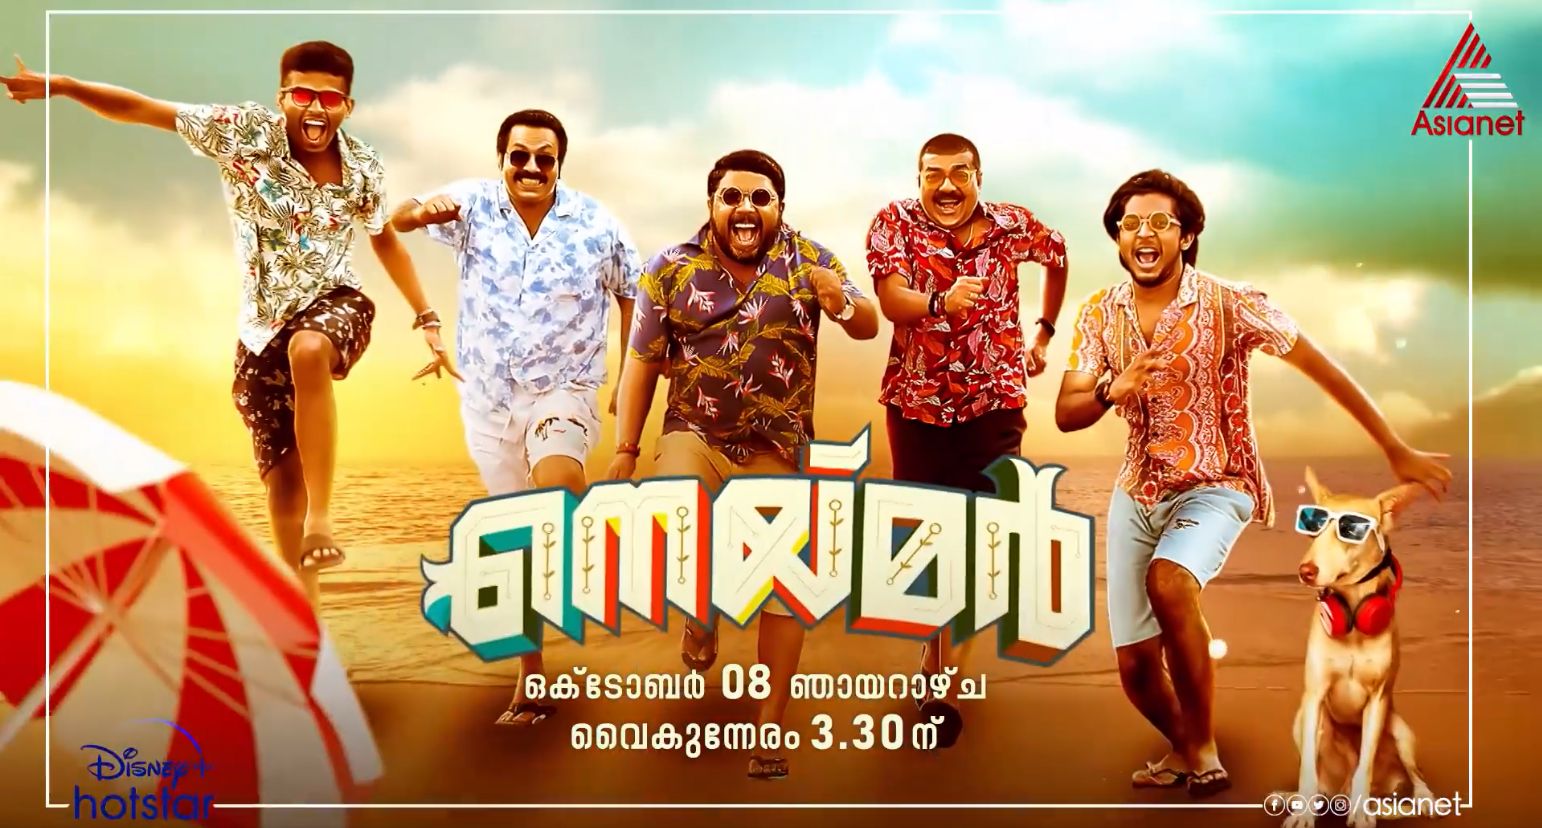 Surya TV Vishu 2016 Day Schedule - Shows and Premier Malayalam Films 2